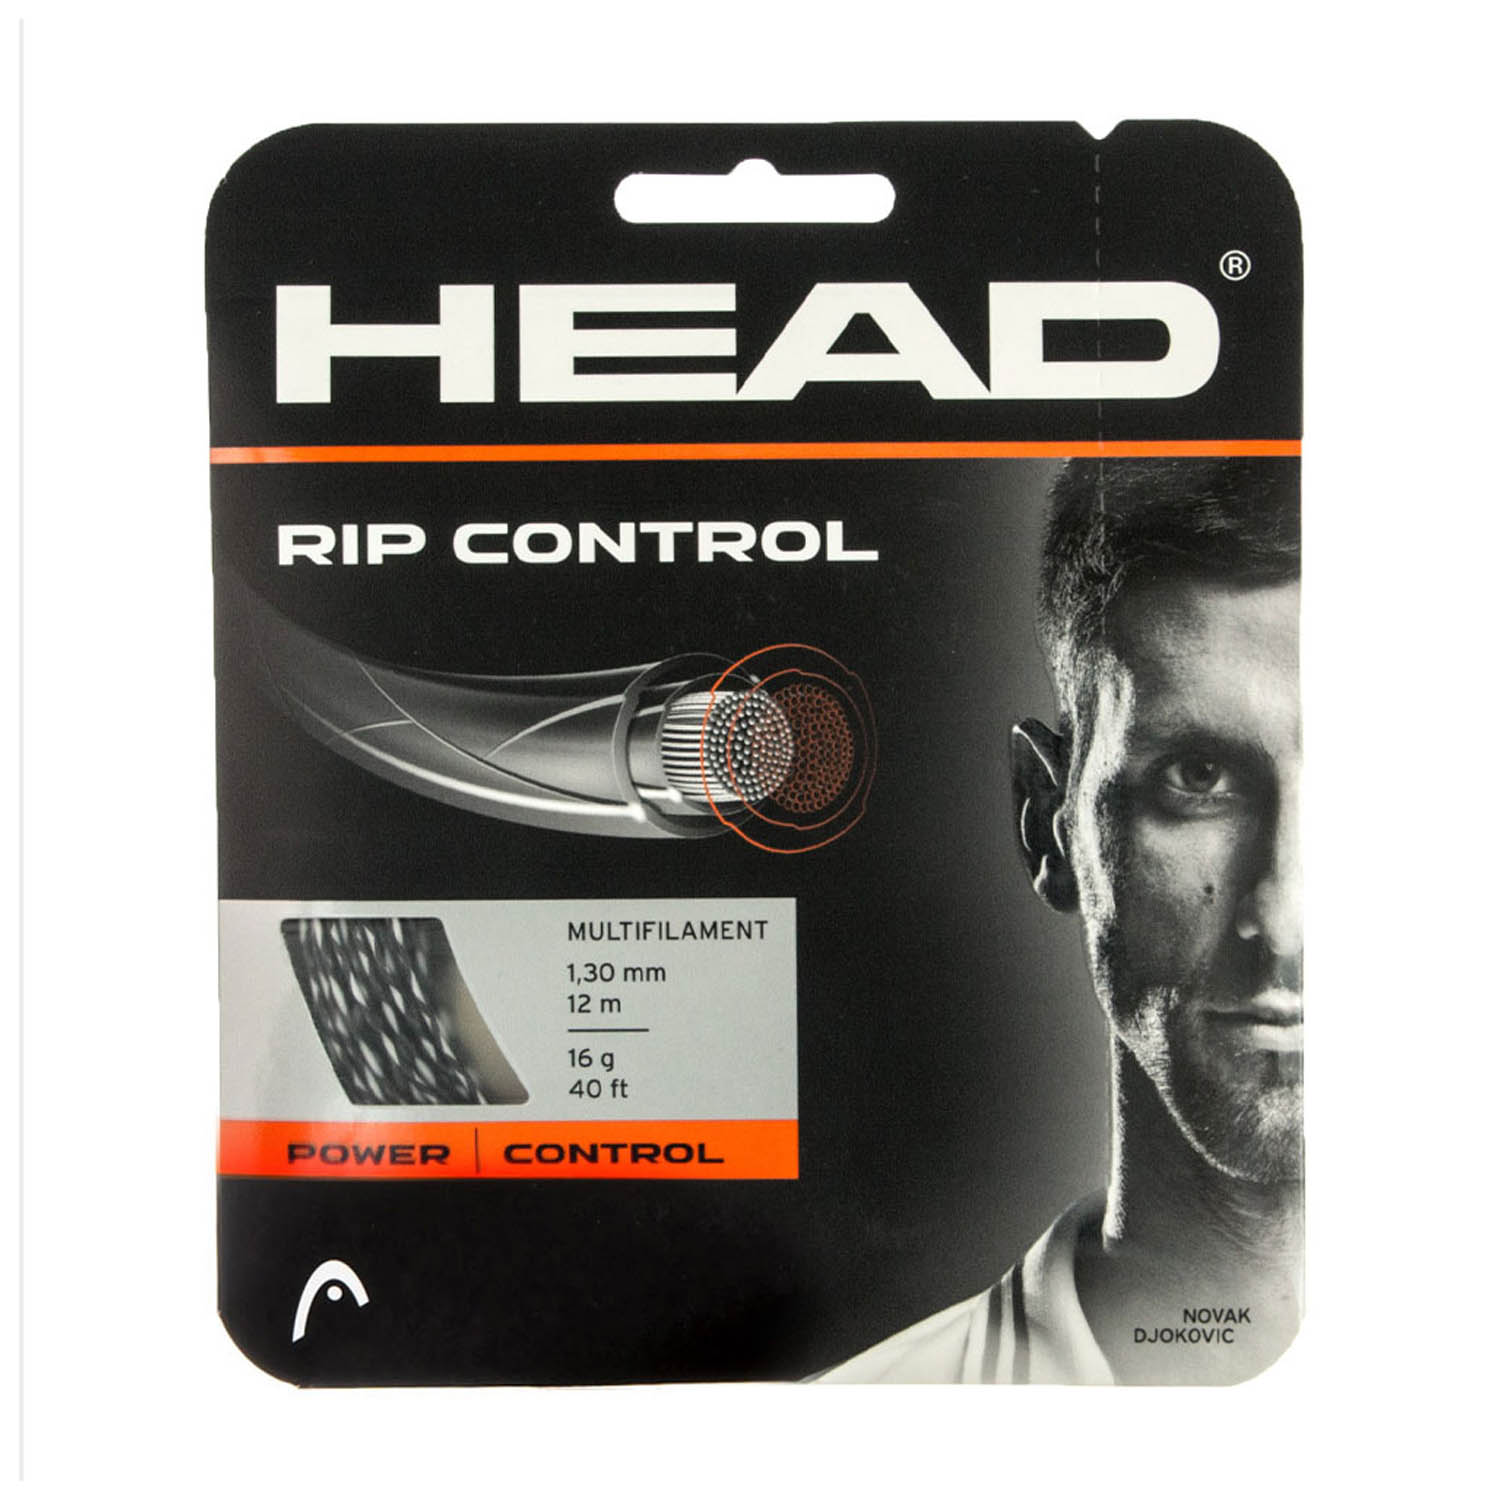 Head Rip Control 1.30 12 m Set - Black/White